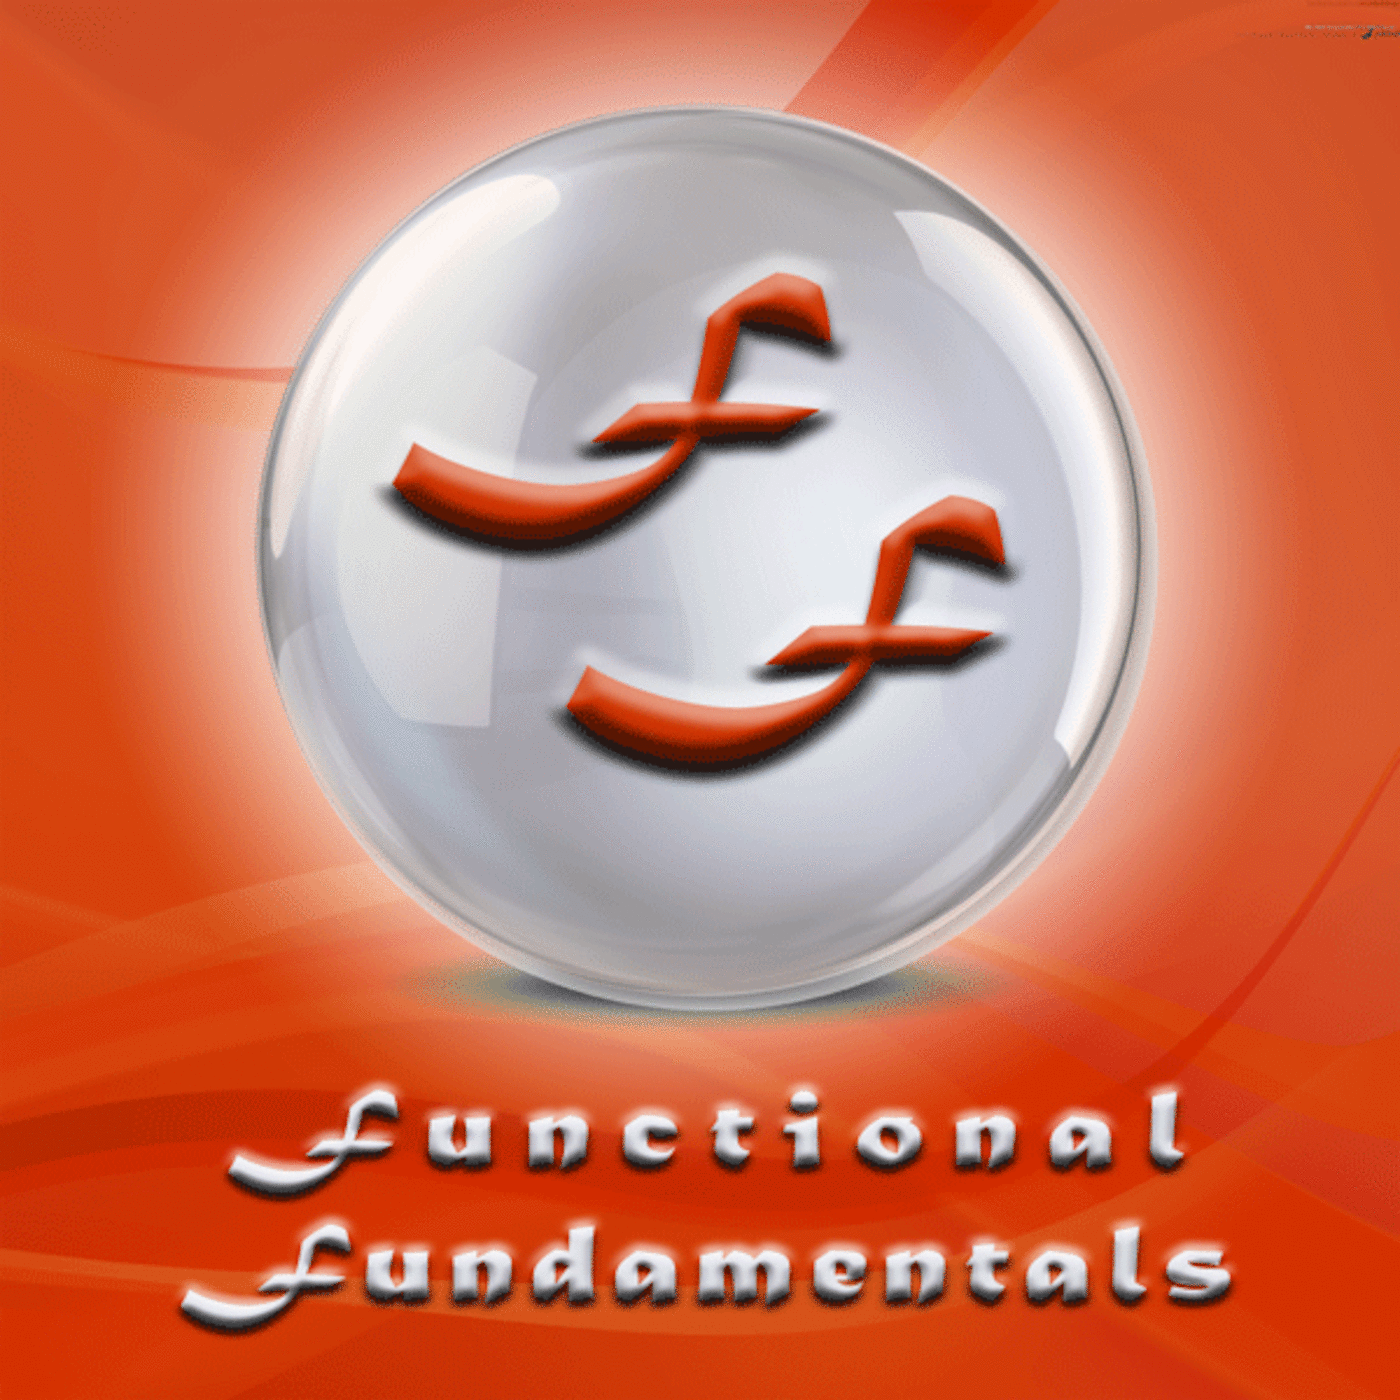 Functional Fundamentals